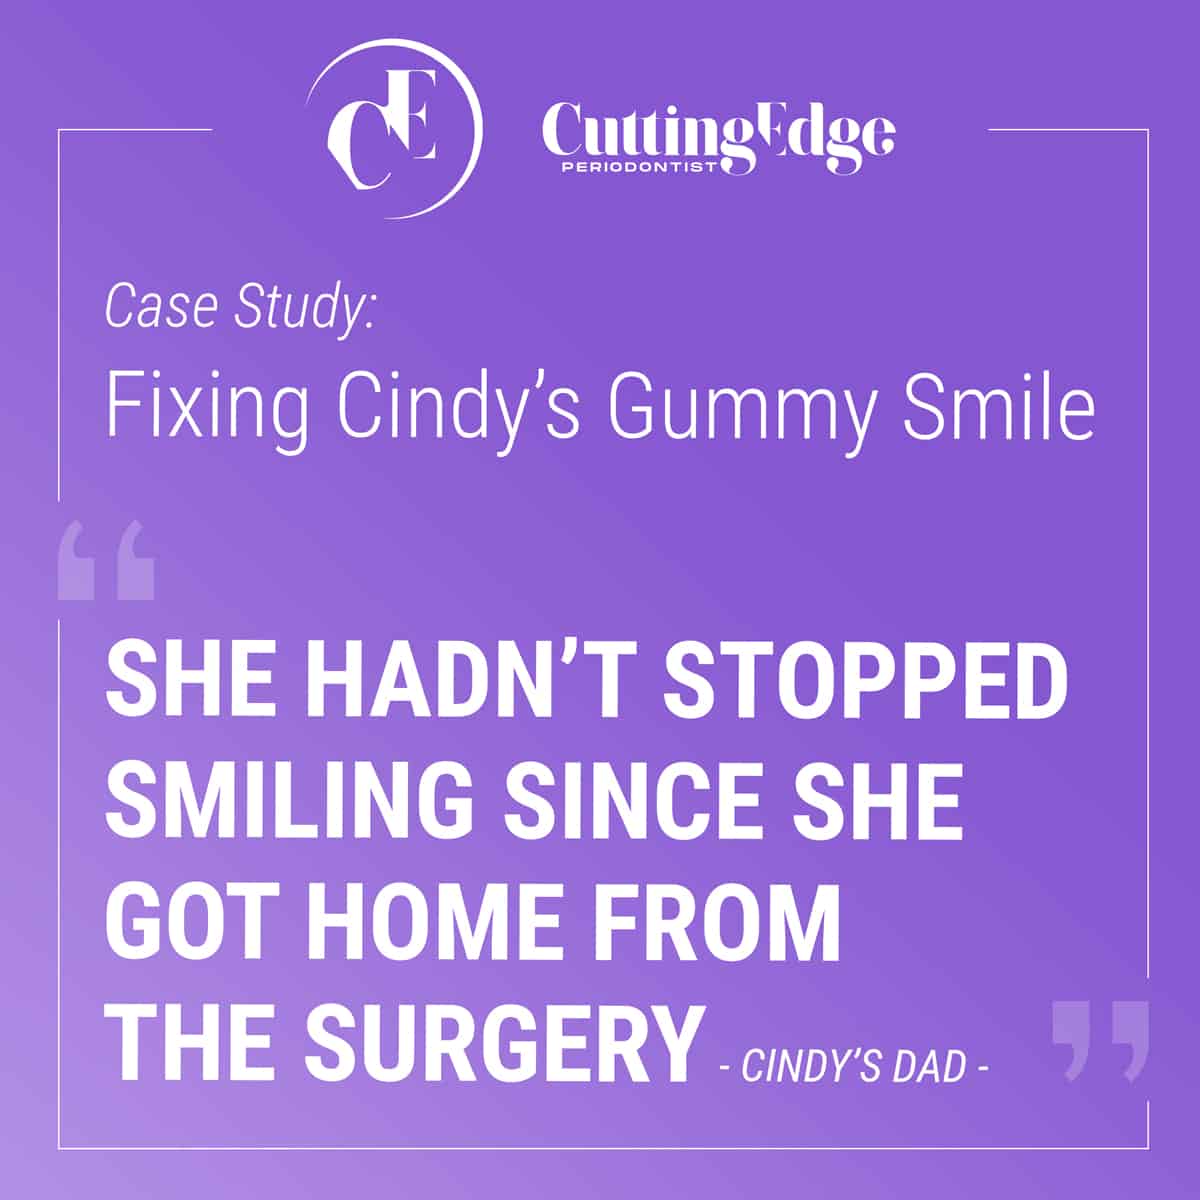 Gummy Smile - Cutting Edge Periodontist - Burbank